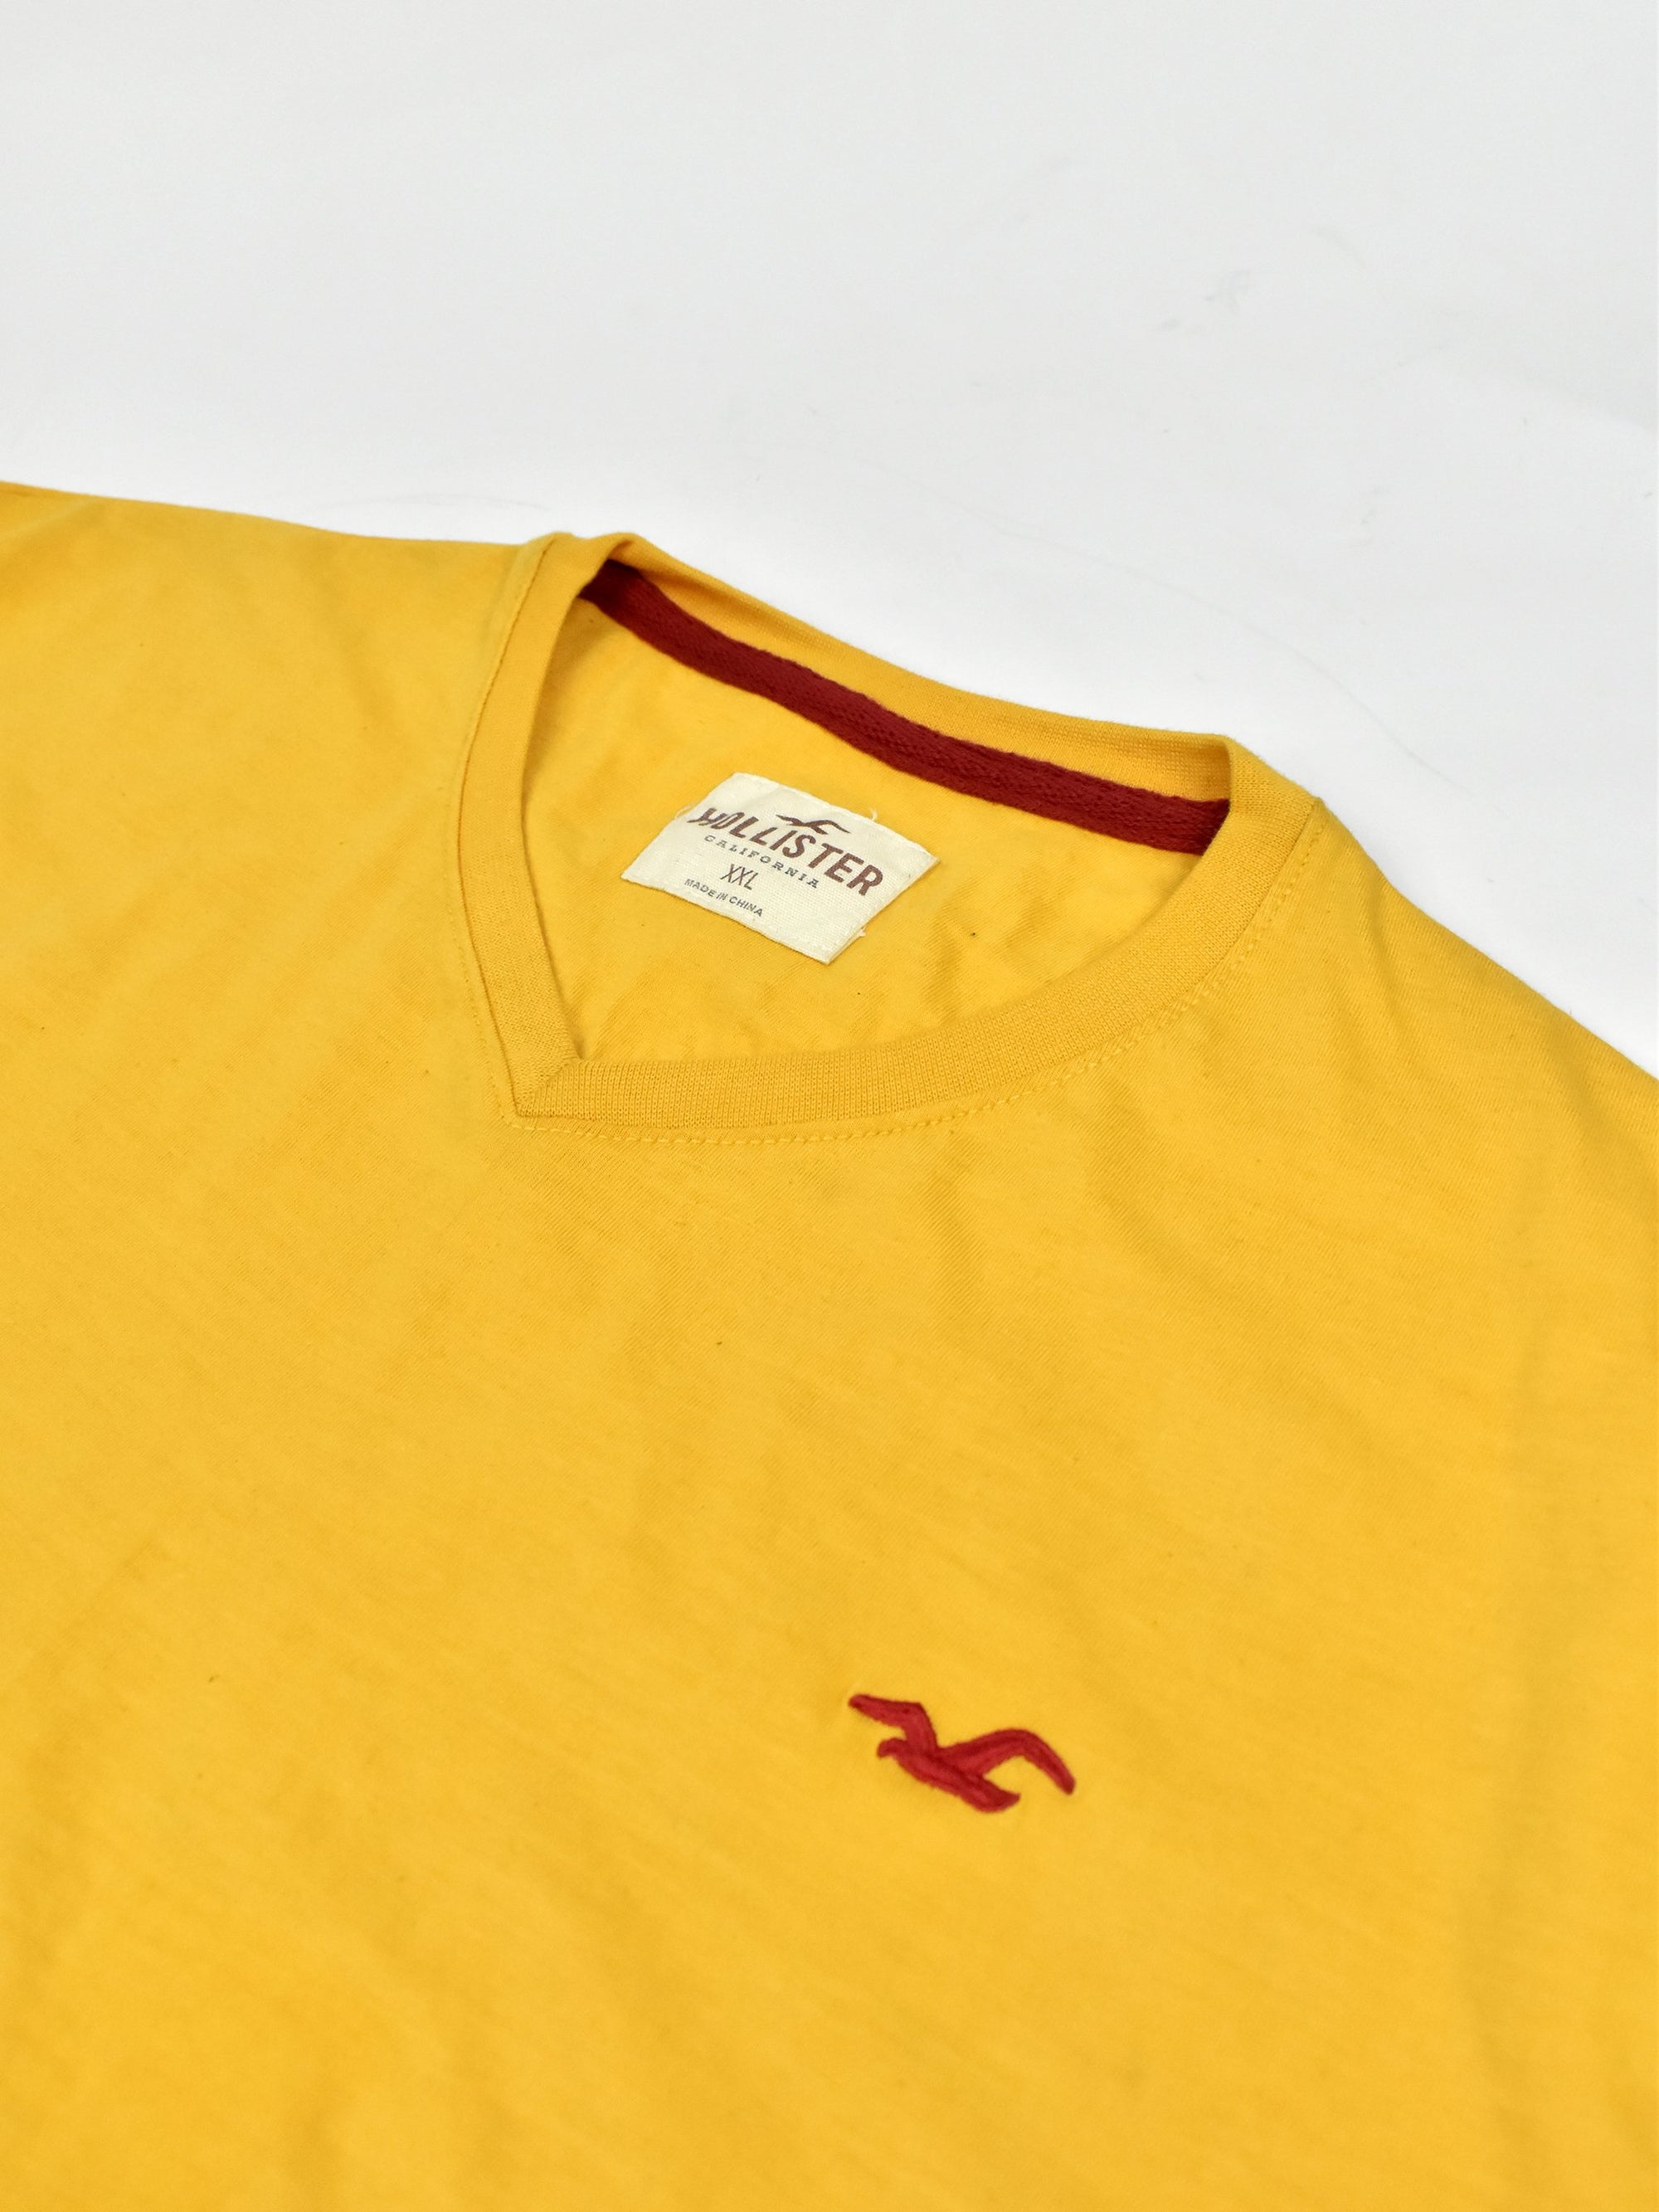 HST Single Jersey V Neck Tee Shirt For Men-Yellow-SP1902